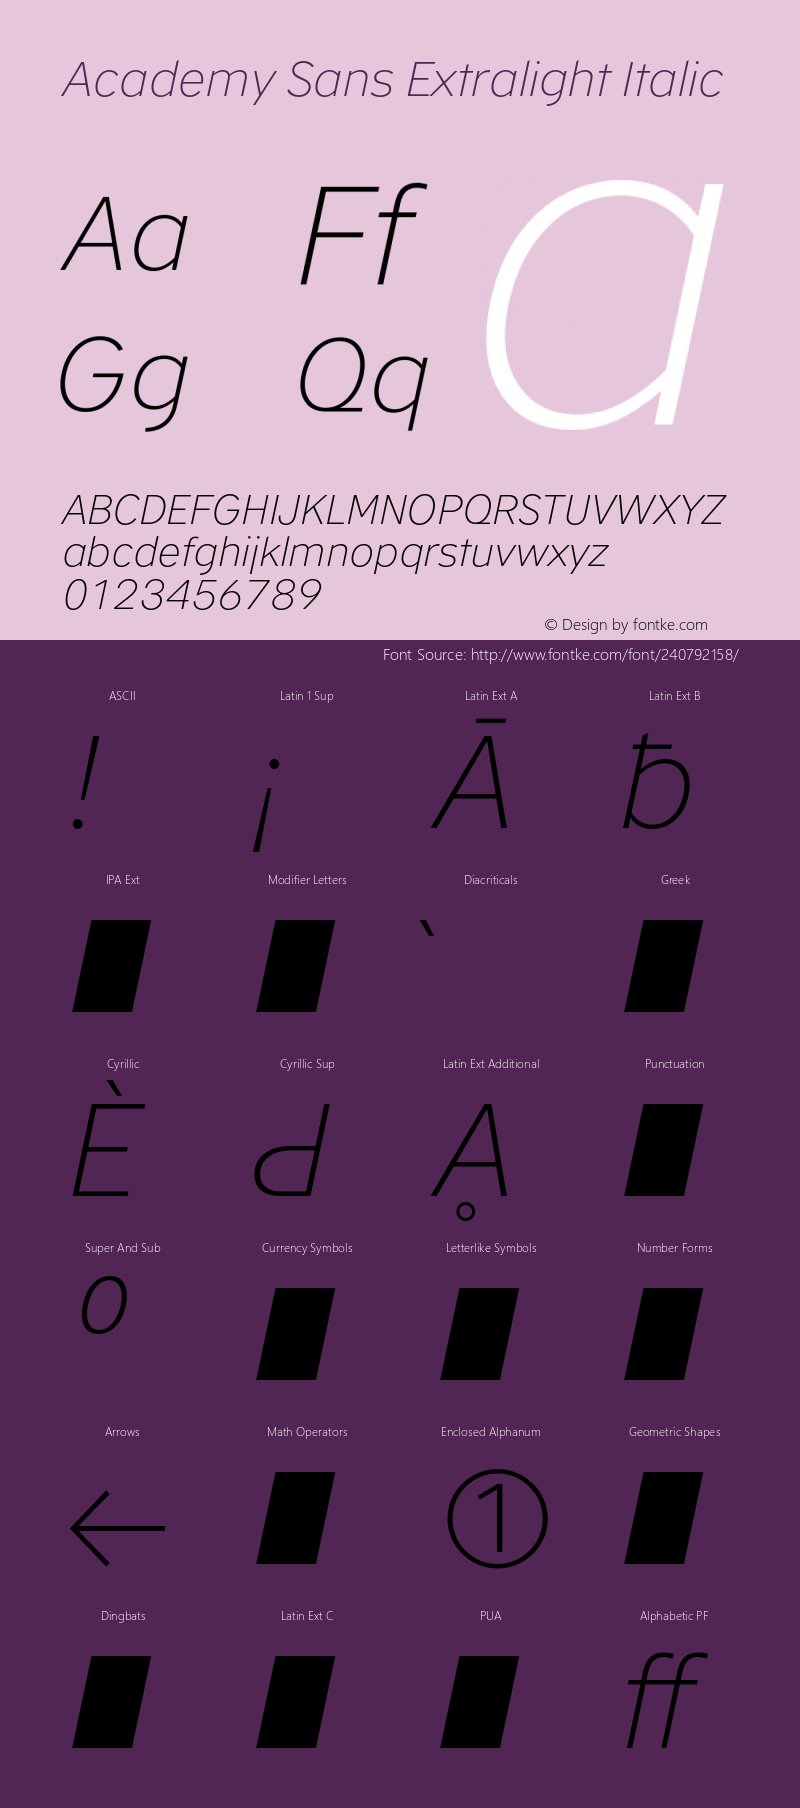 Academy Sans Extralight Italic Version 2.001;PS 2.1;hotconv 1.0.88;makeotf.lib2.5.647800图片样张